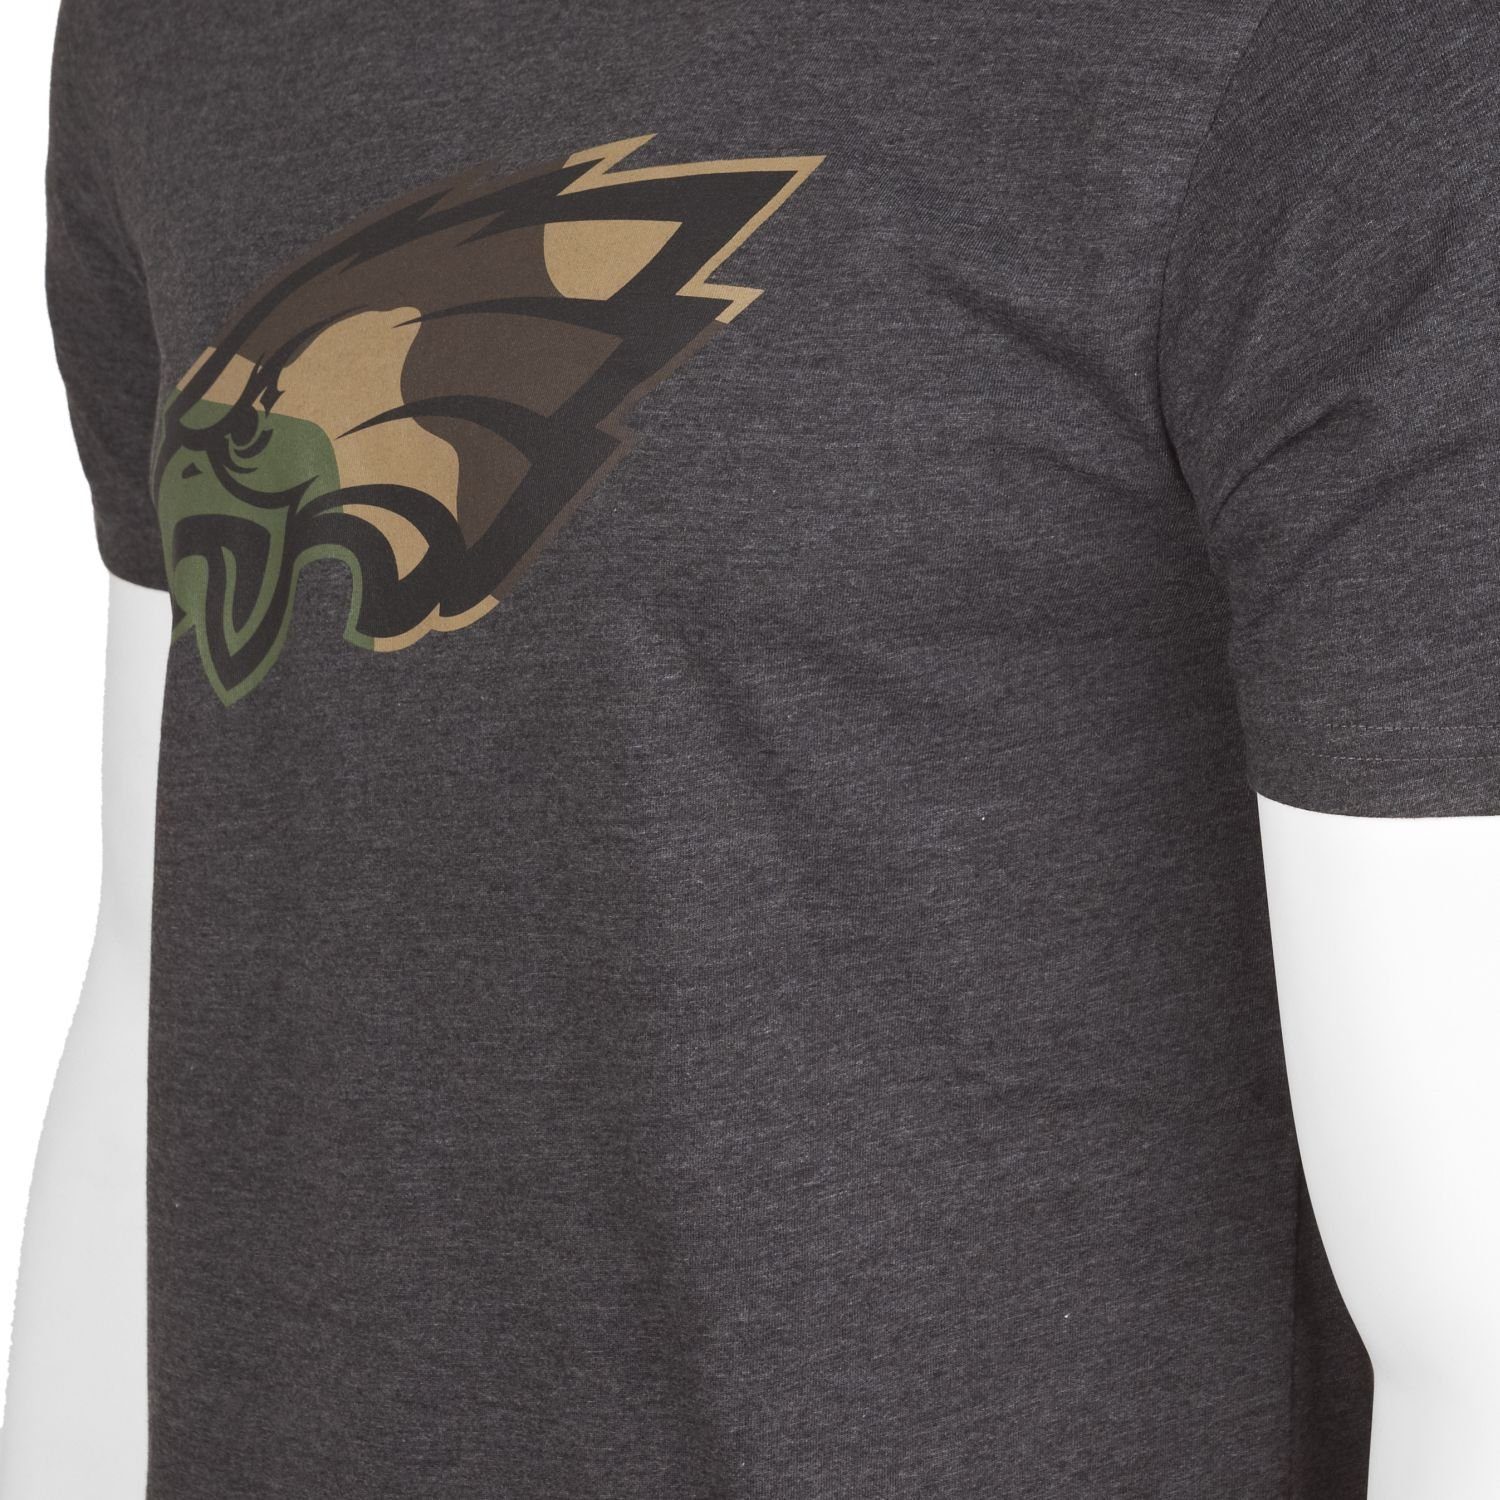 Era NFL Eagles New charcoal Logo Print-Shirt Team Philadelphia